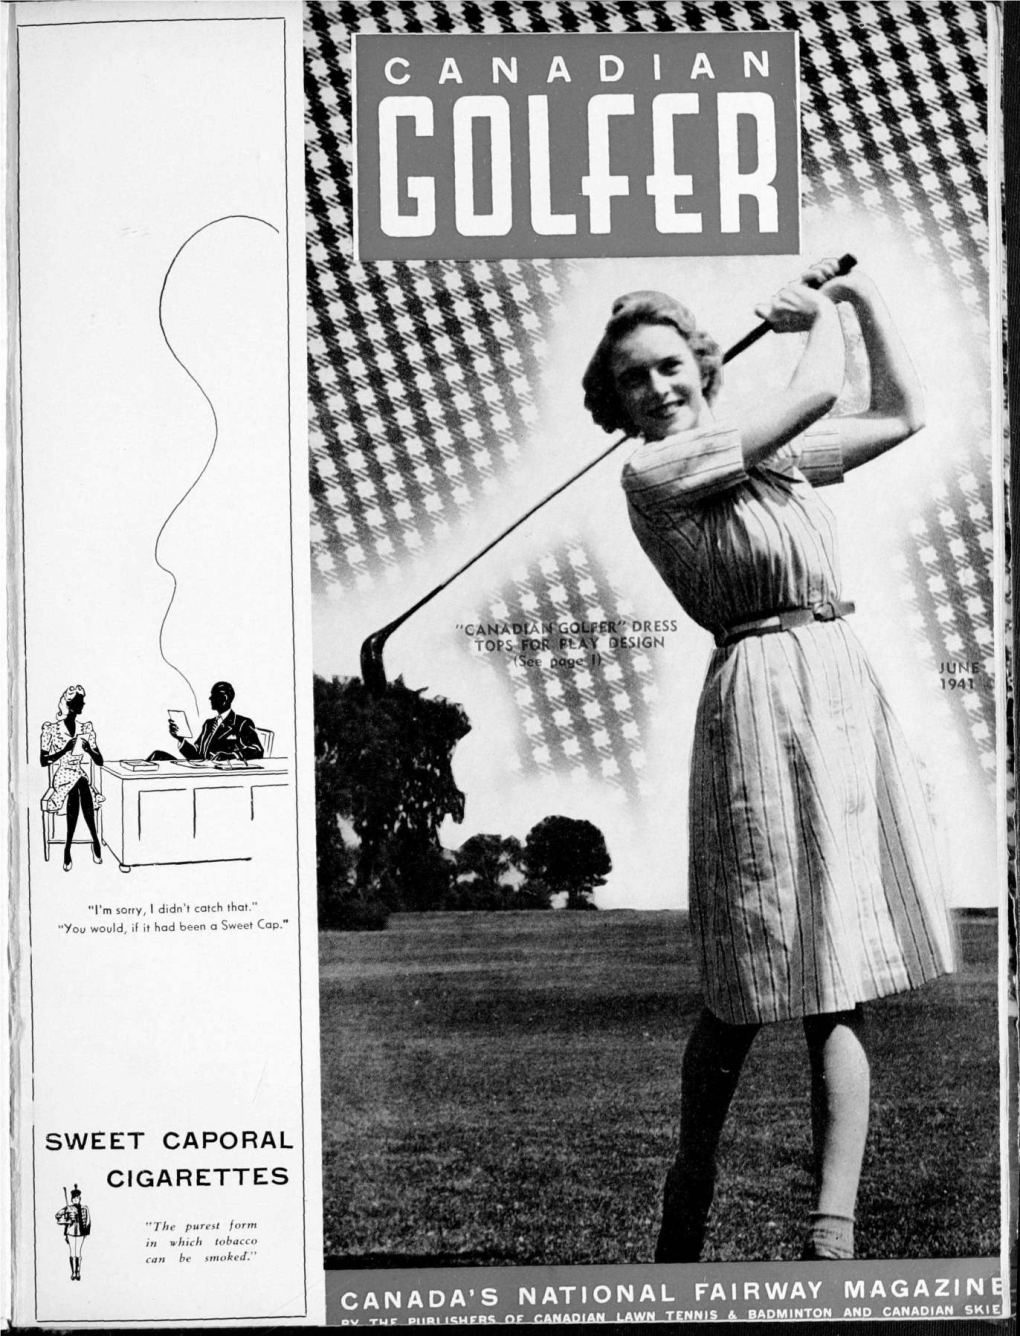 Canadian Golfer, June, 1941